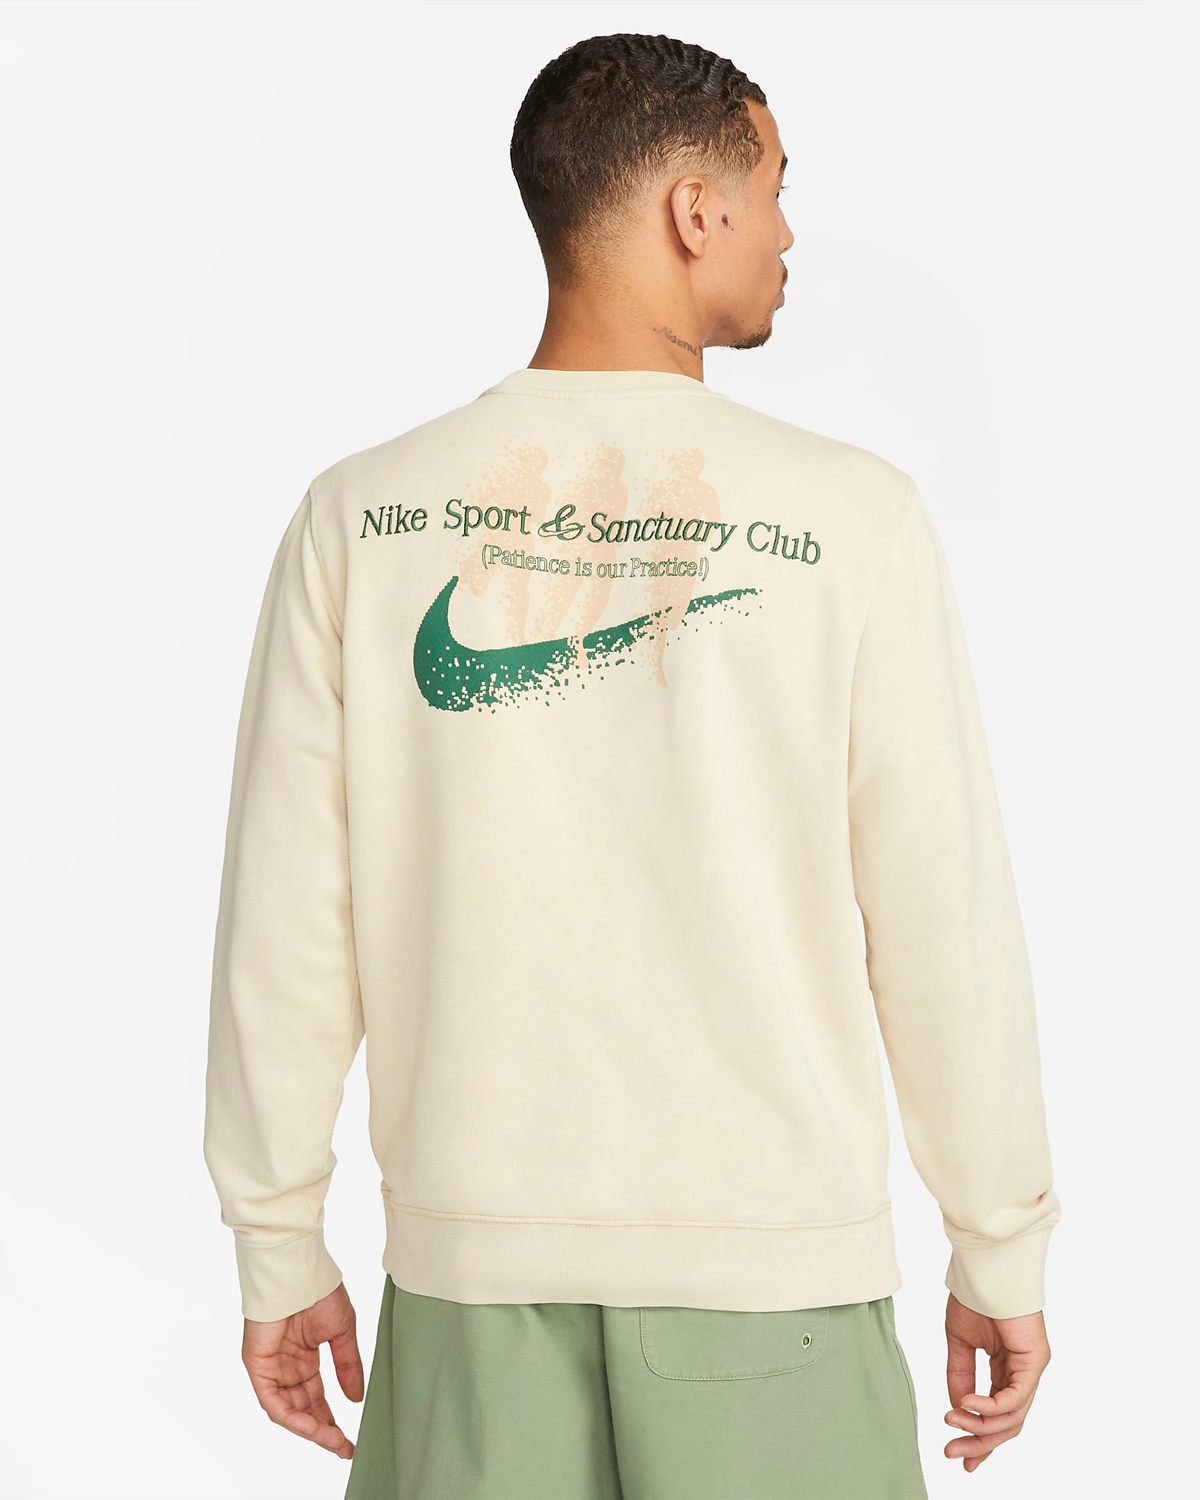 Nike-Sport-Sanctuary-Club-Sweatshirt-Sesame-Gorge-Green-2